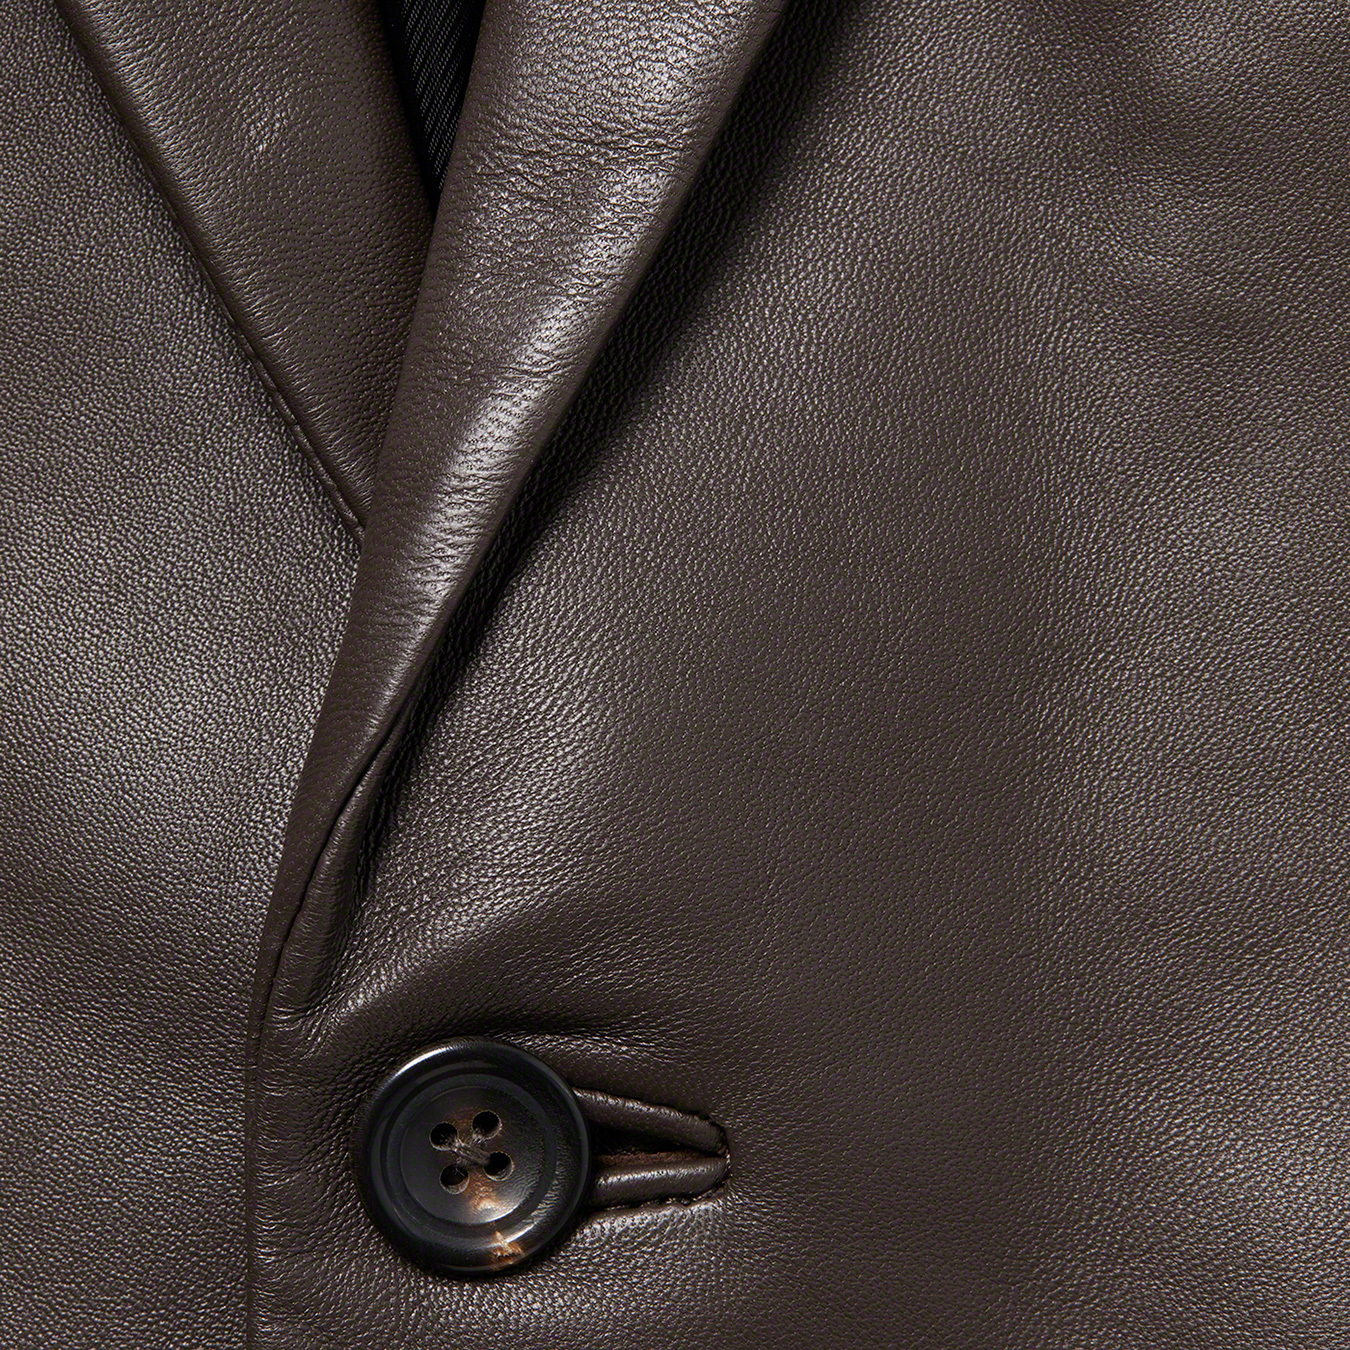 Supreme Leather Blazer